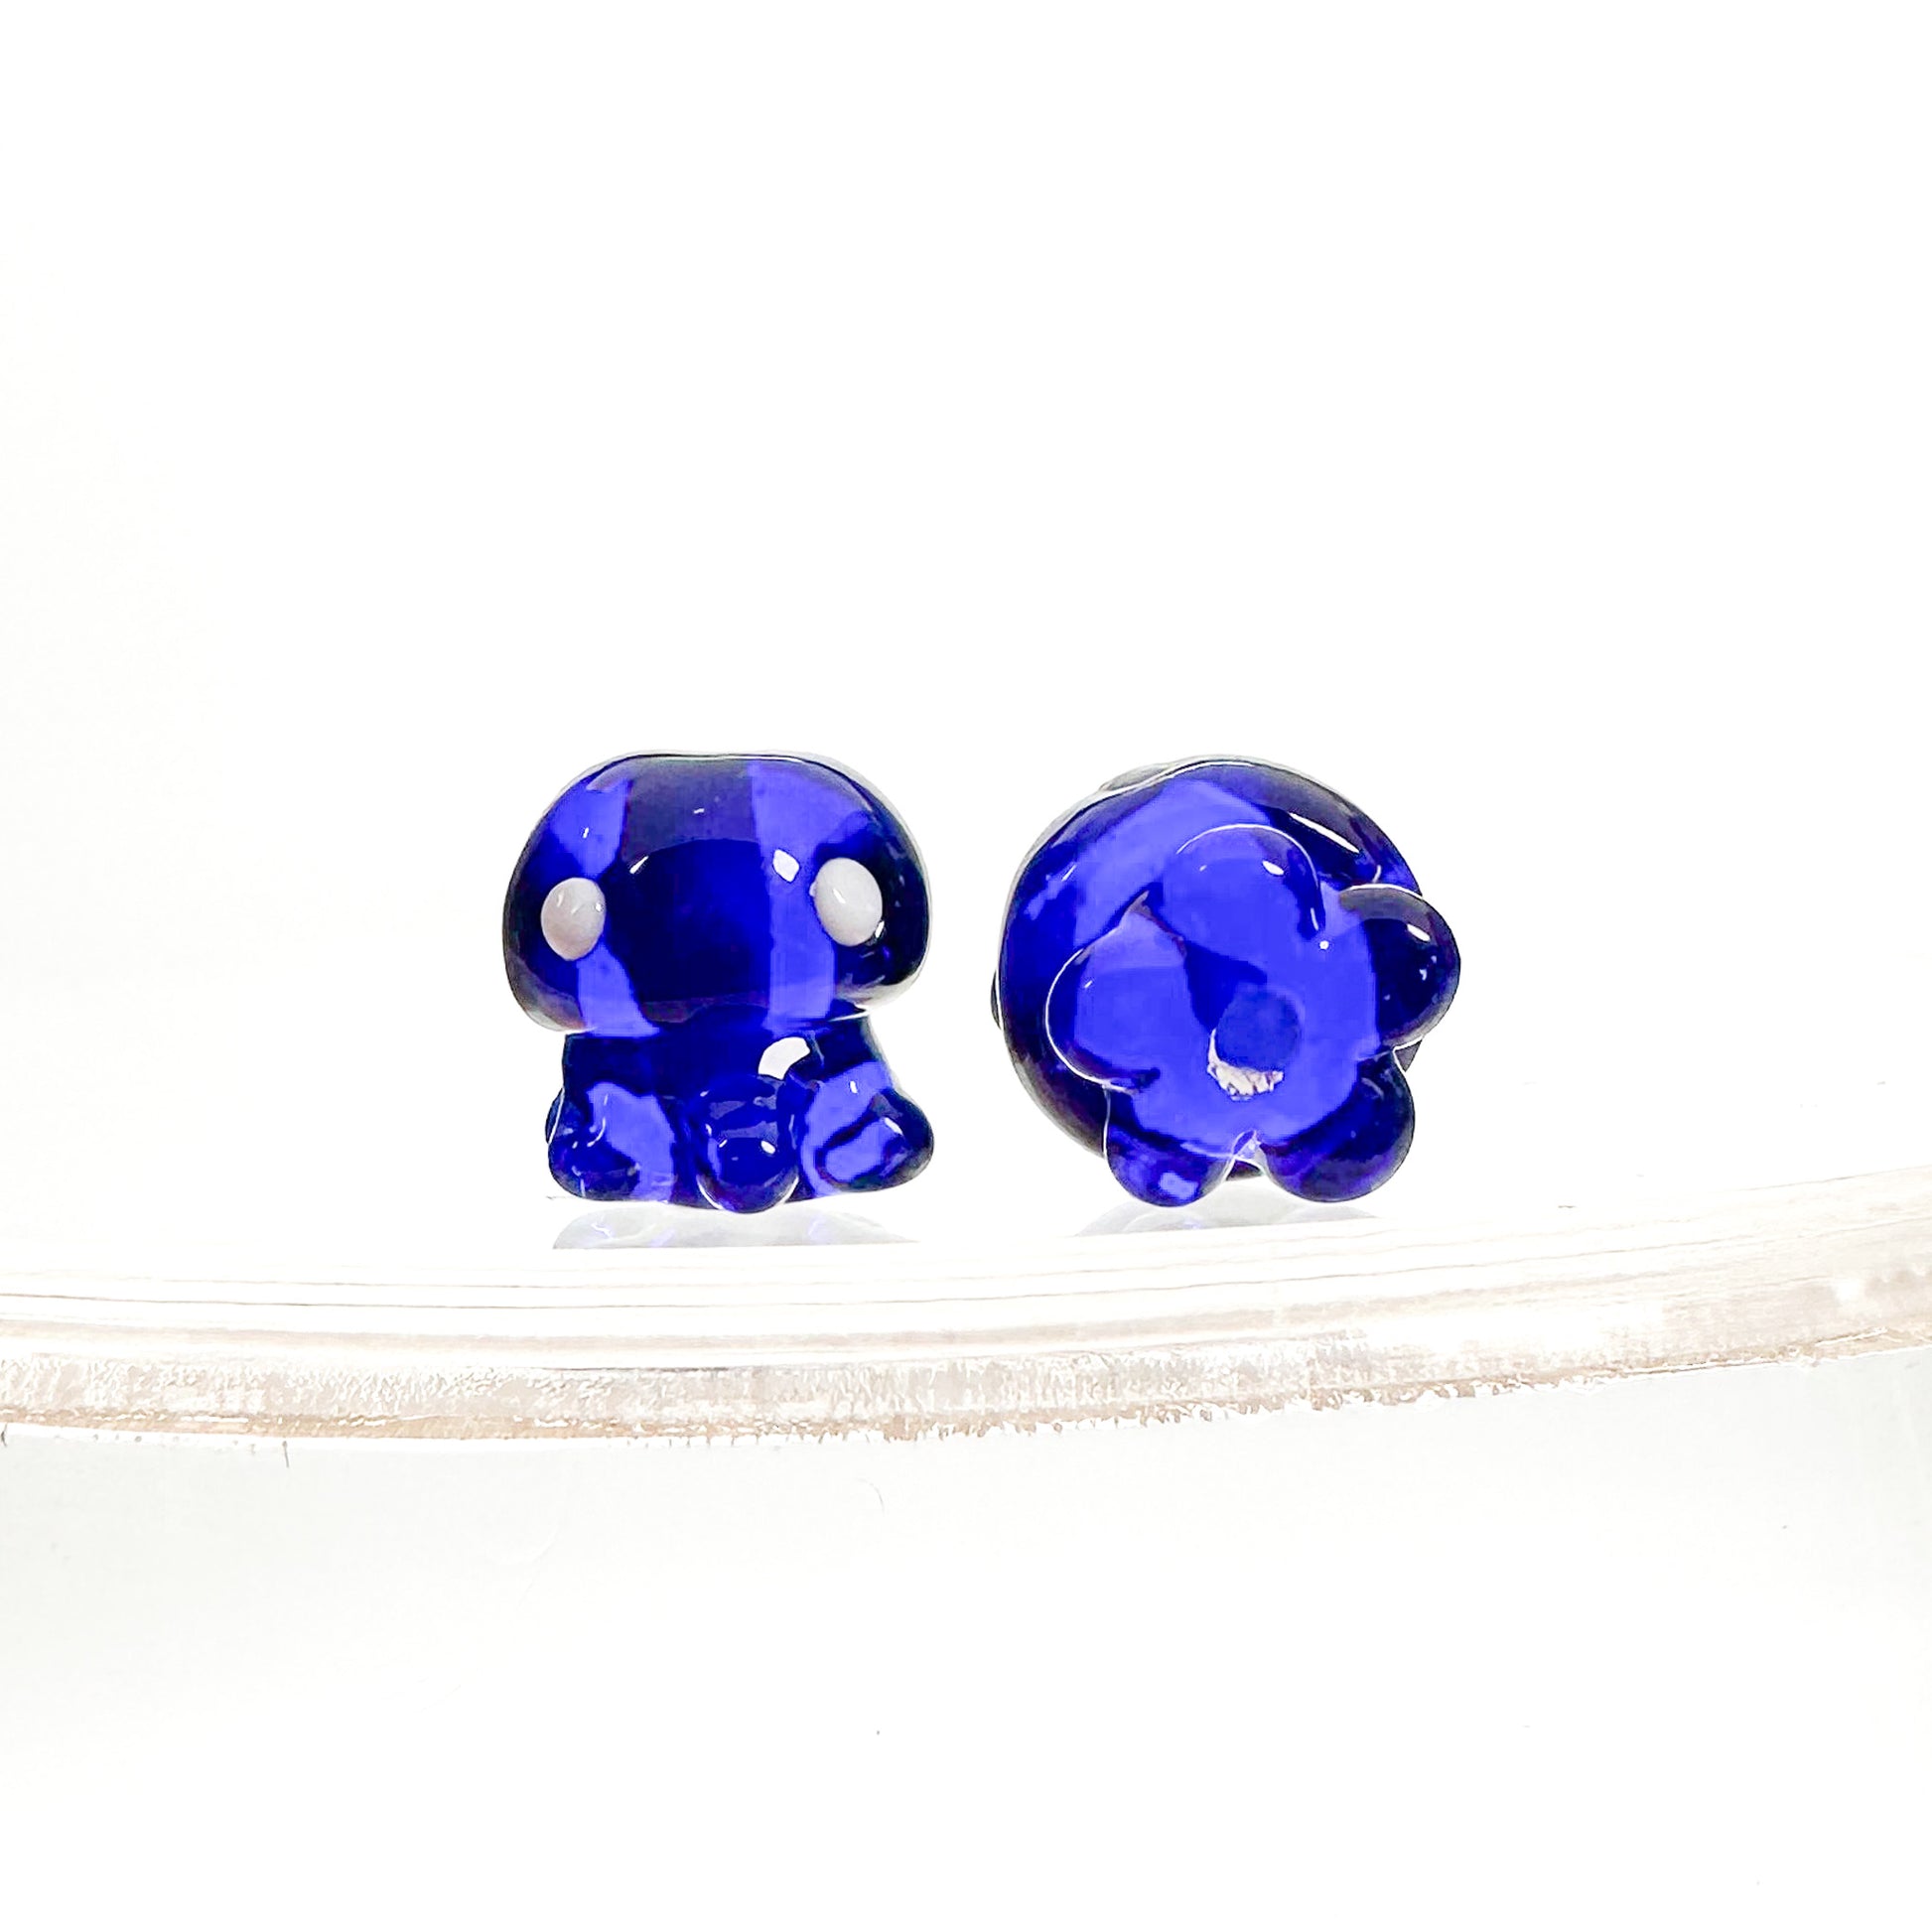 Chibi Handmade Glass Beads - Jellyfish (3 Color Options)